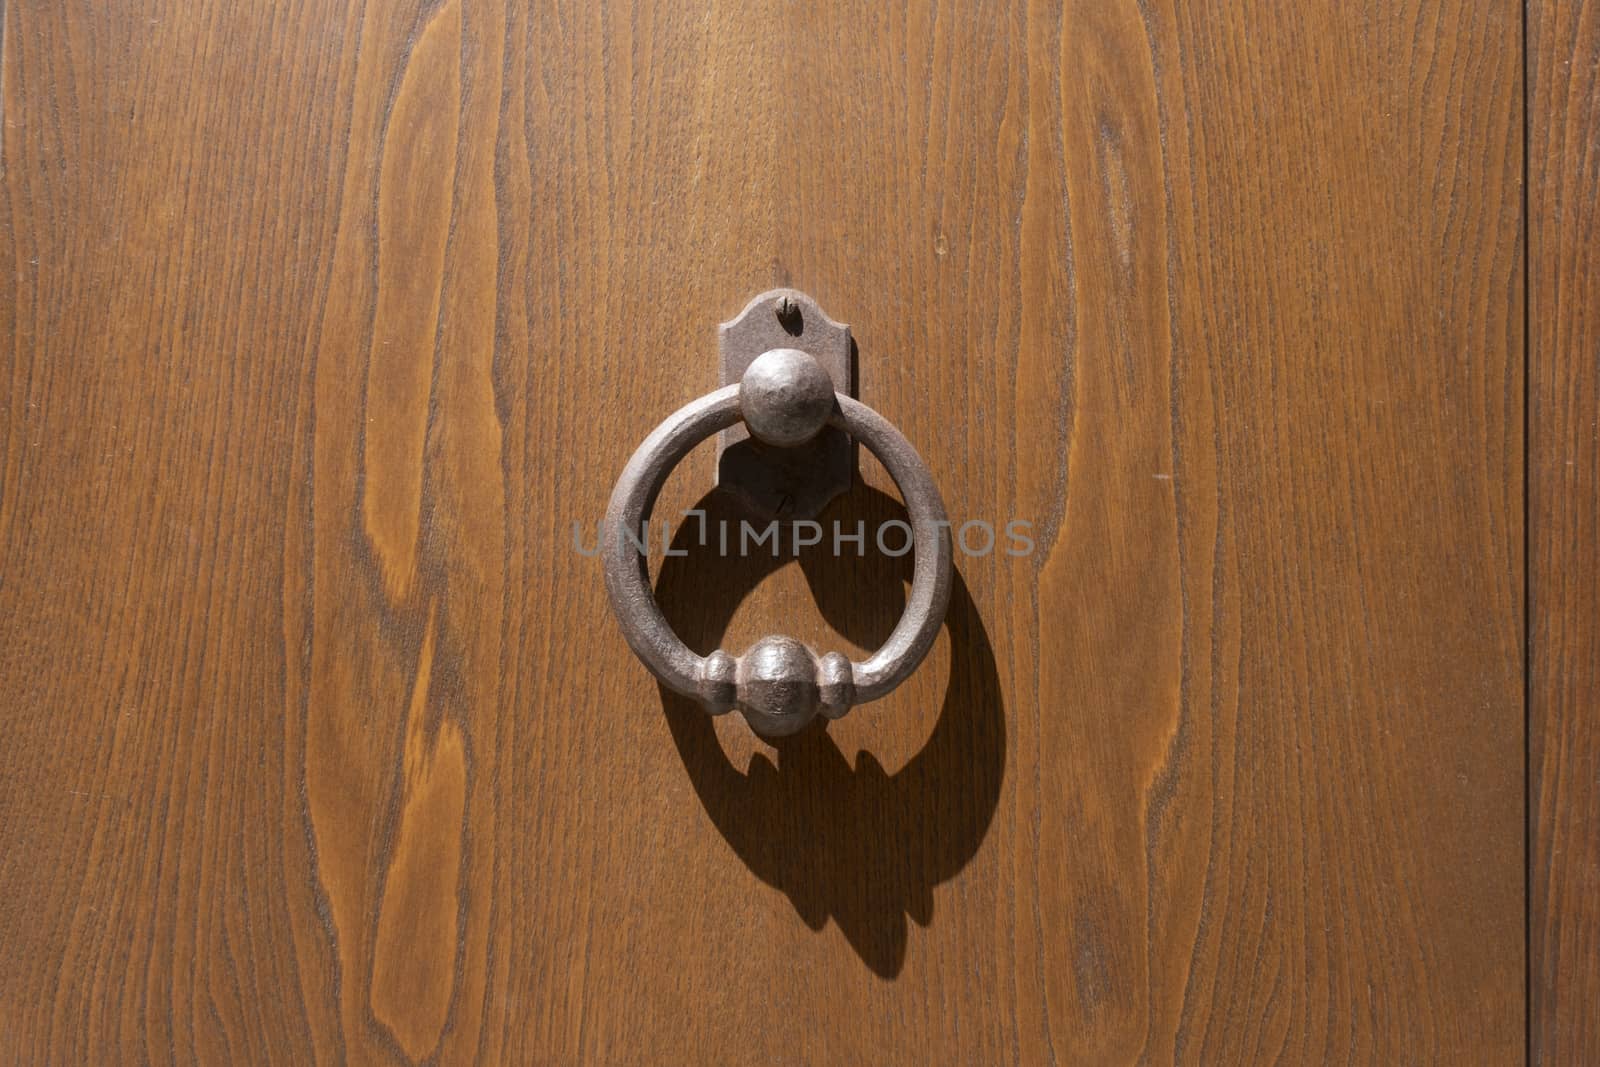 Royal style doorknocker on a wooden door by Tjeerdkruse